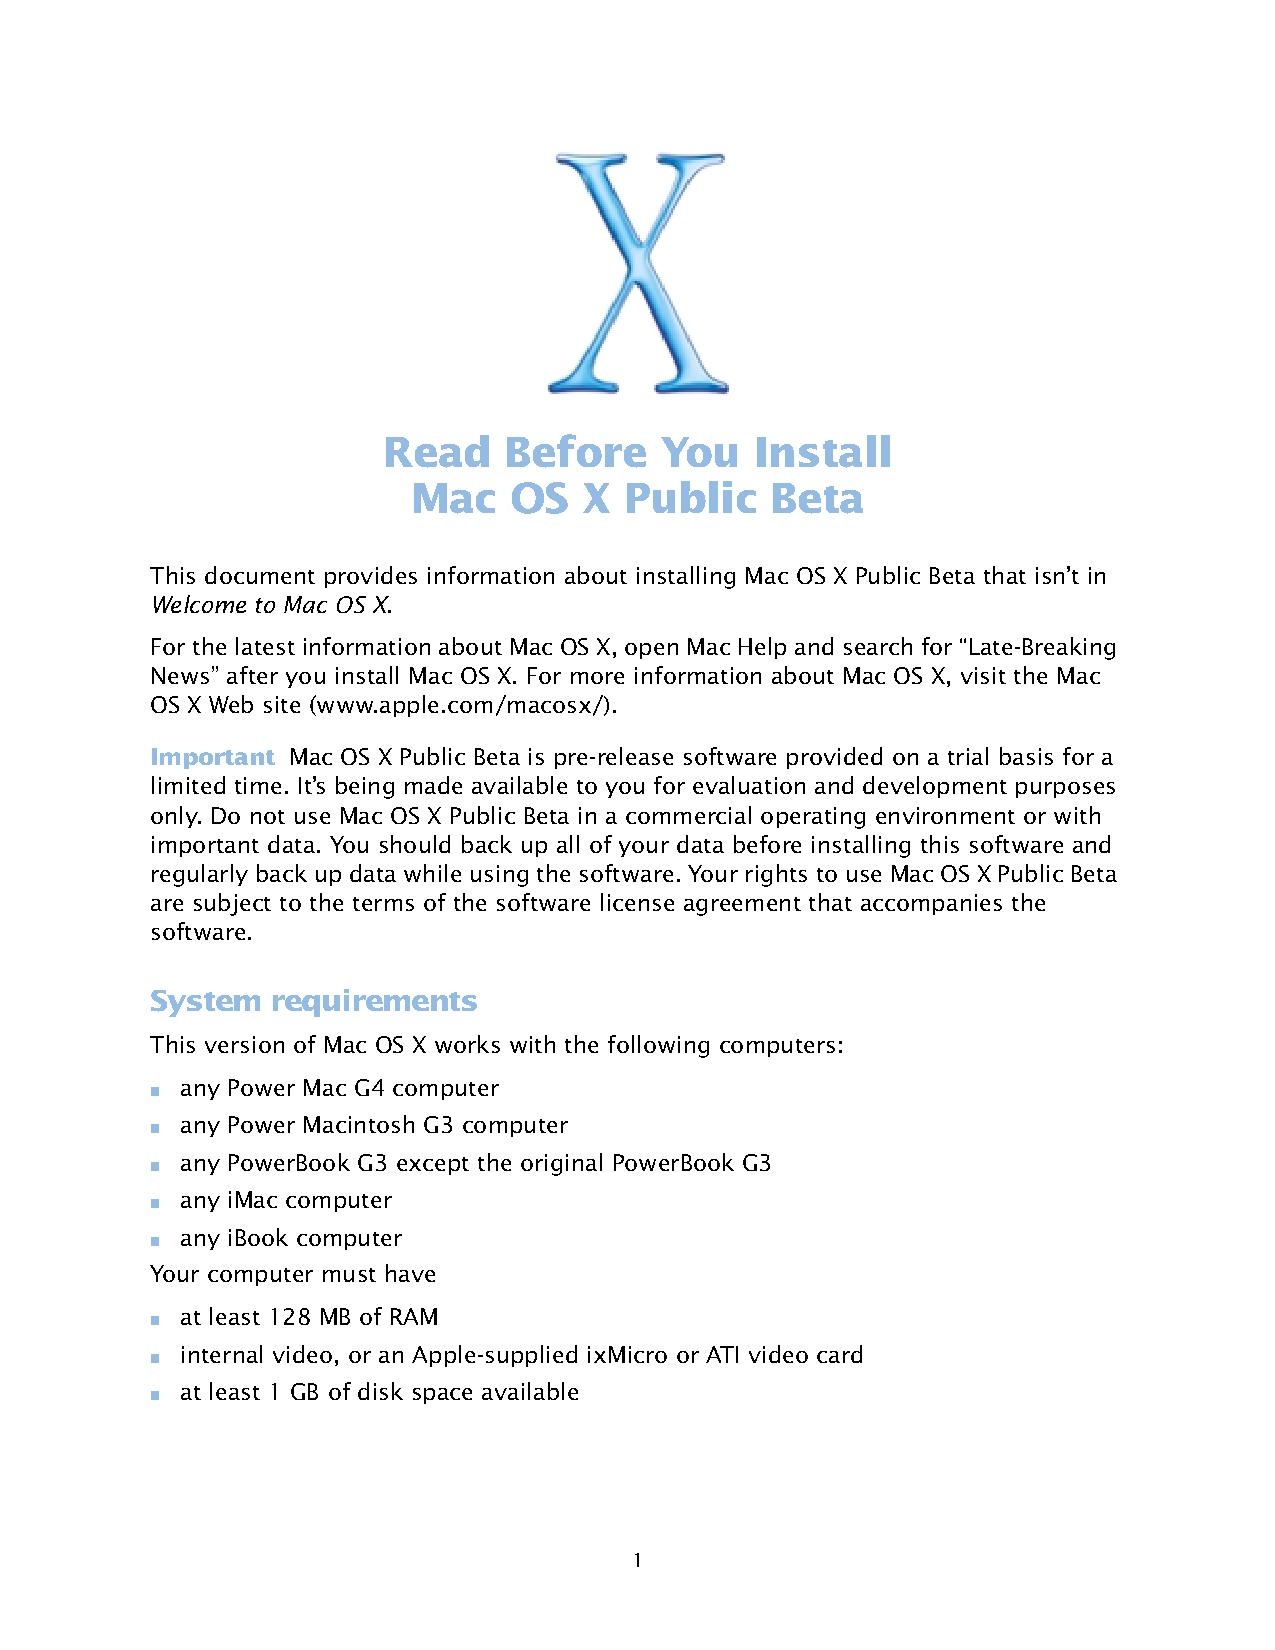 Read Before You Install Mac OS X Public Beta